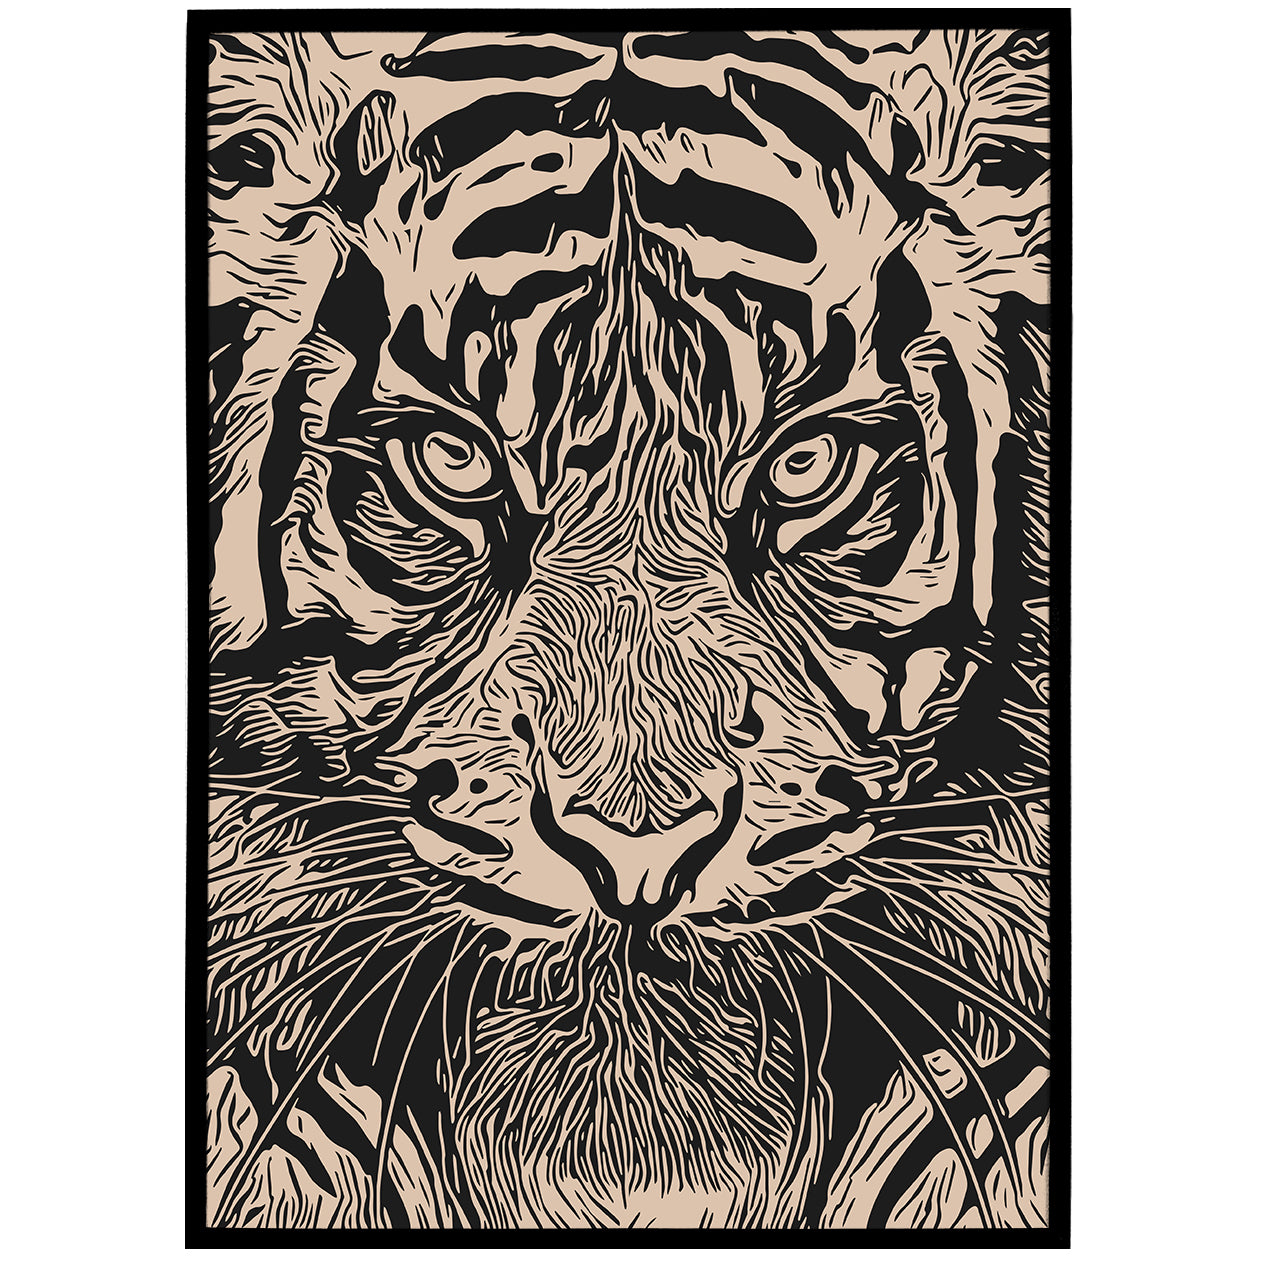 Bengal Tiger Poster